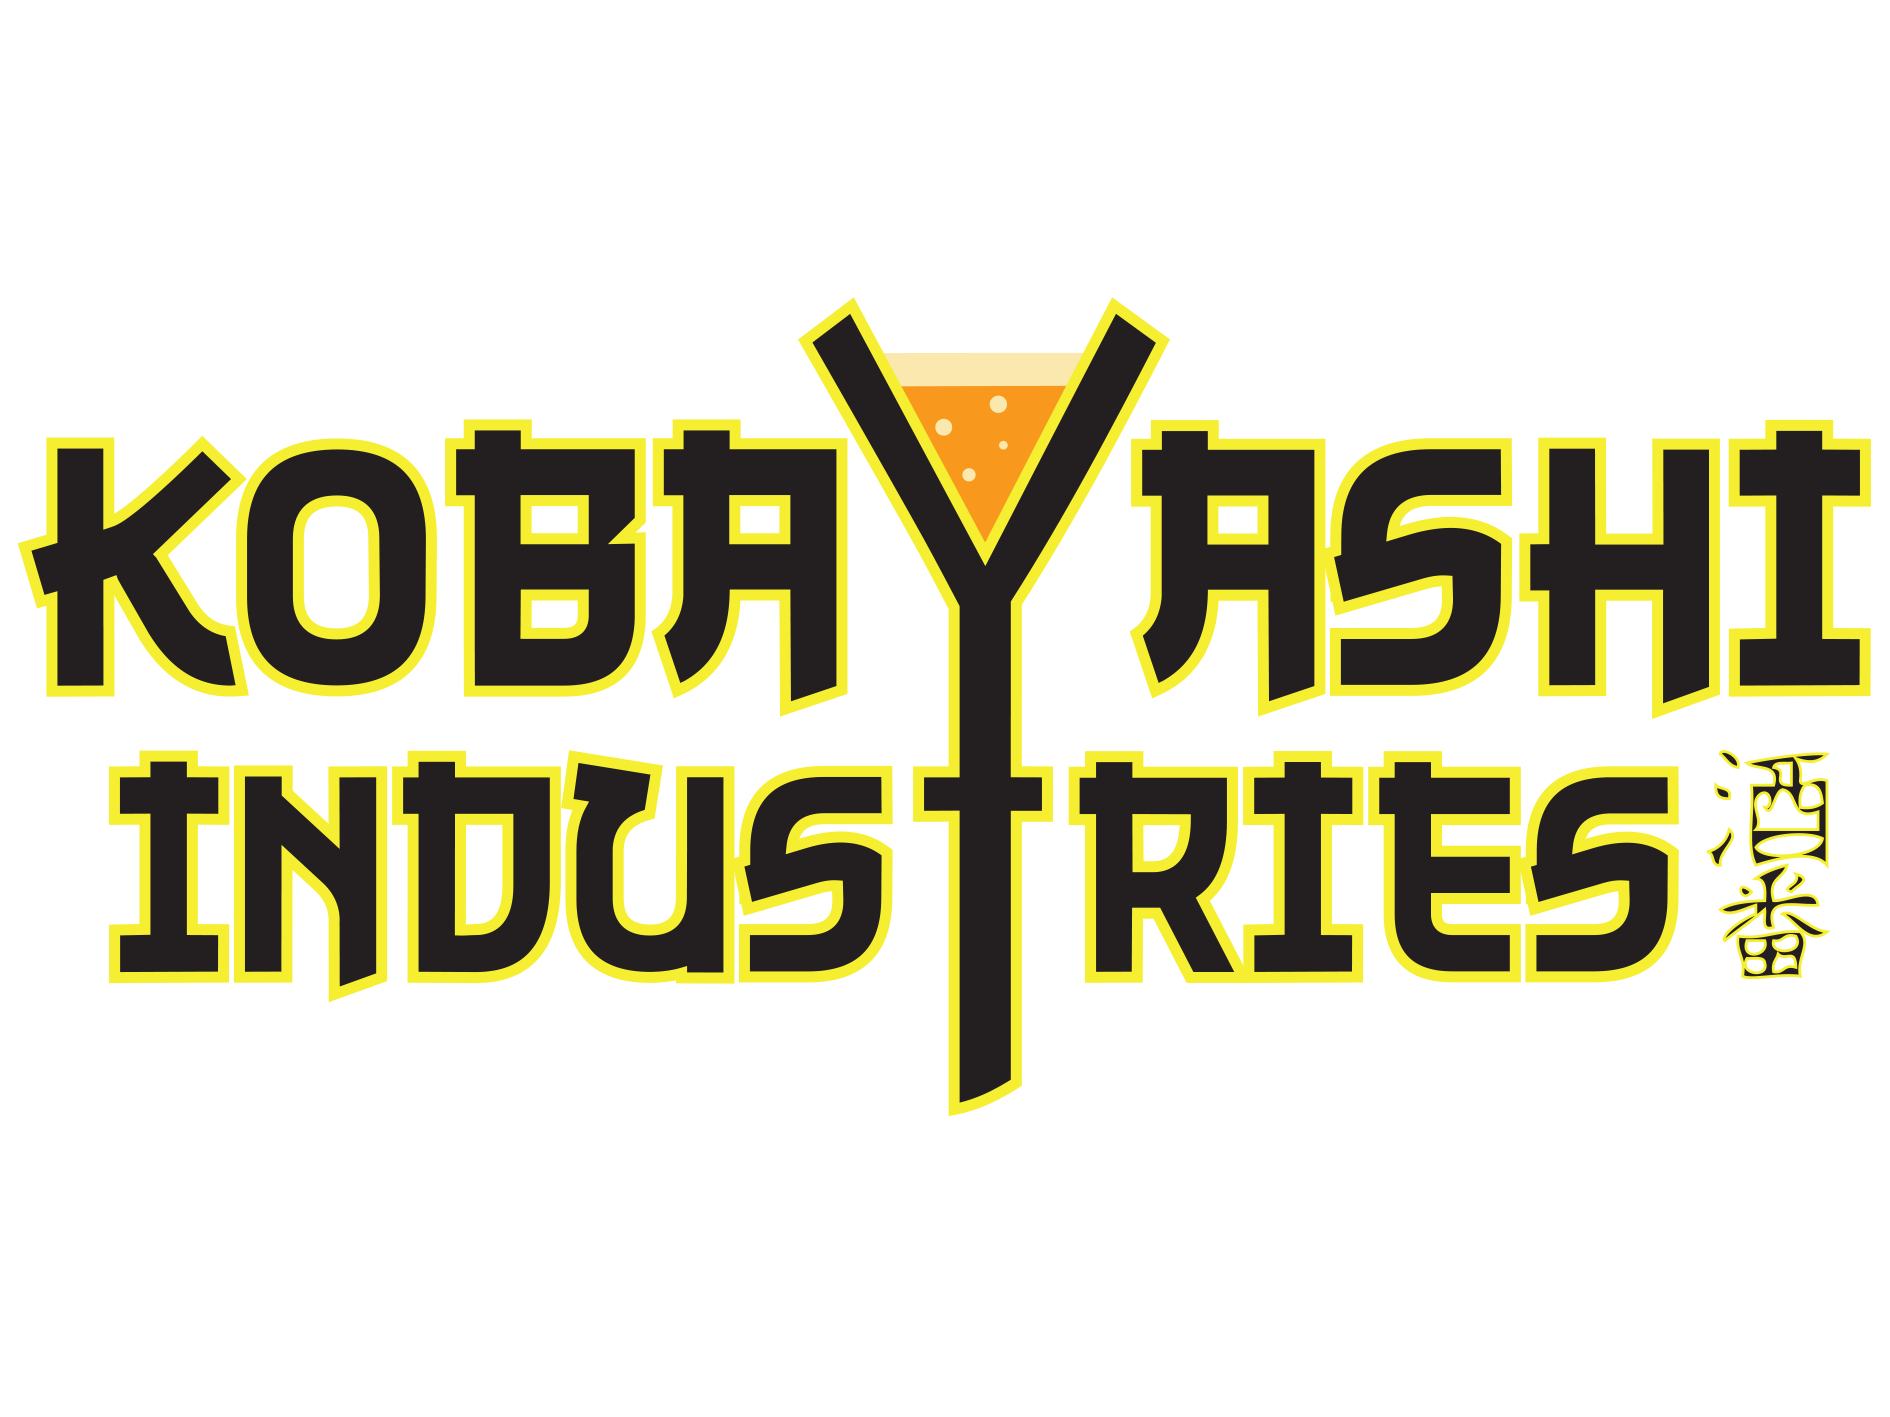 Kobayashi Industries